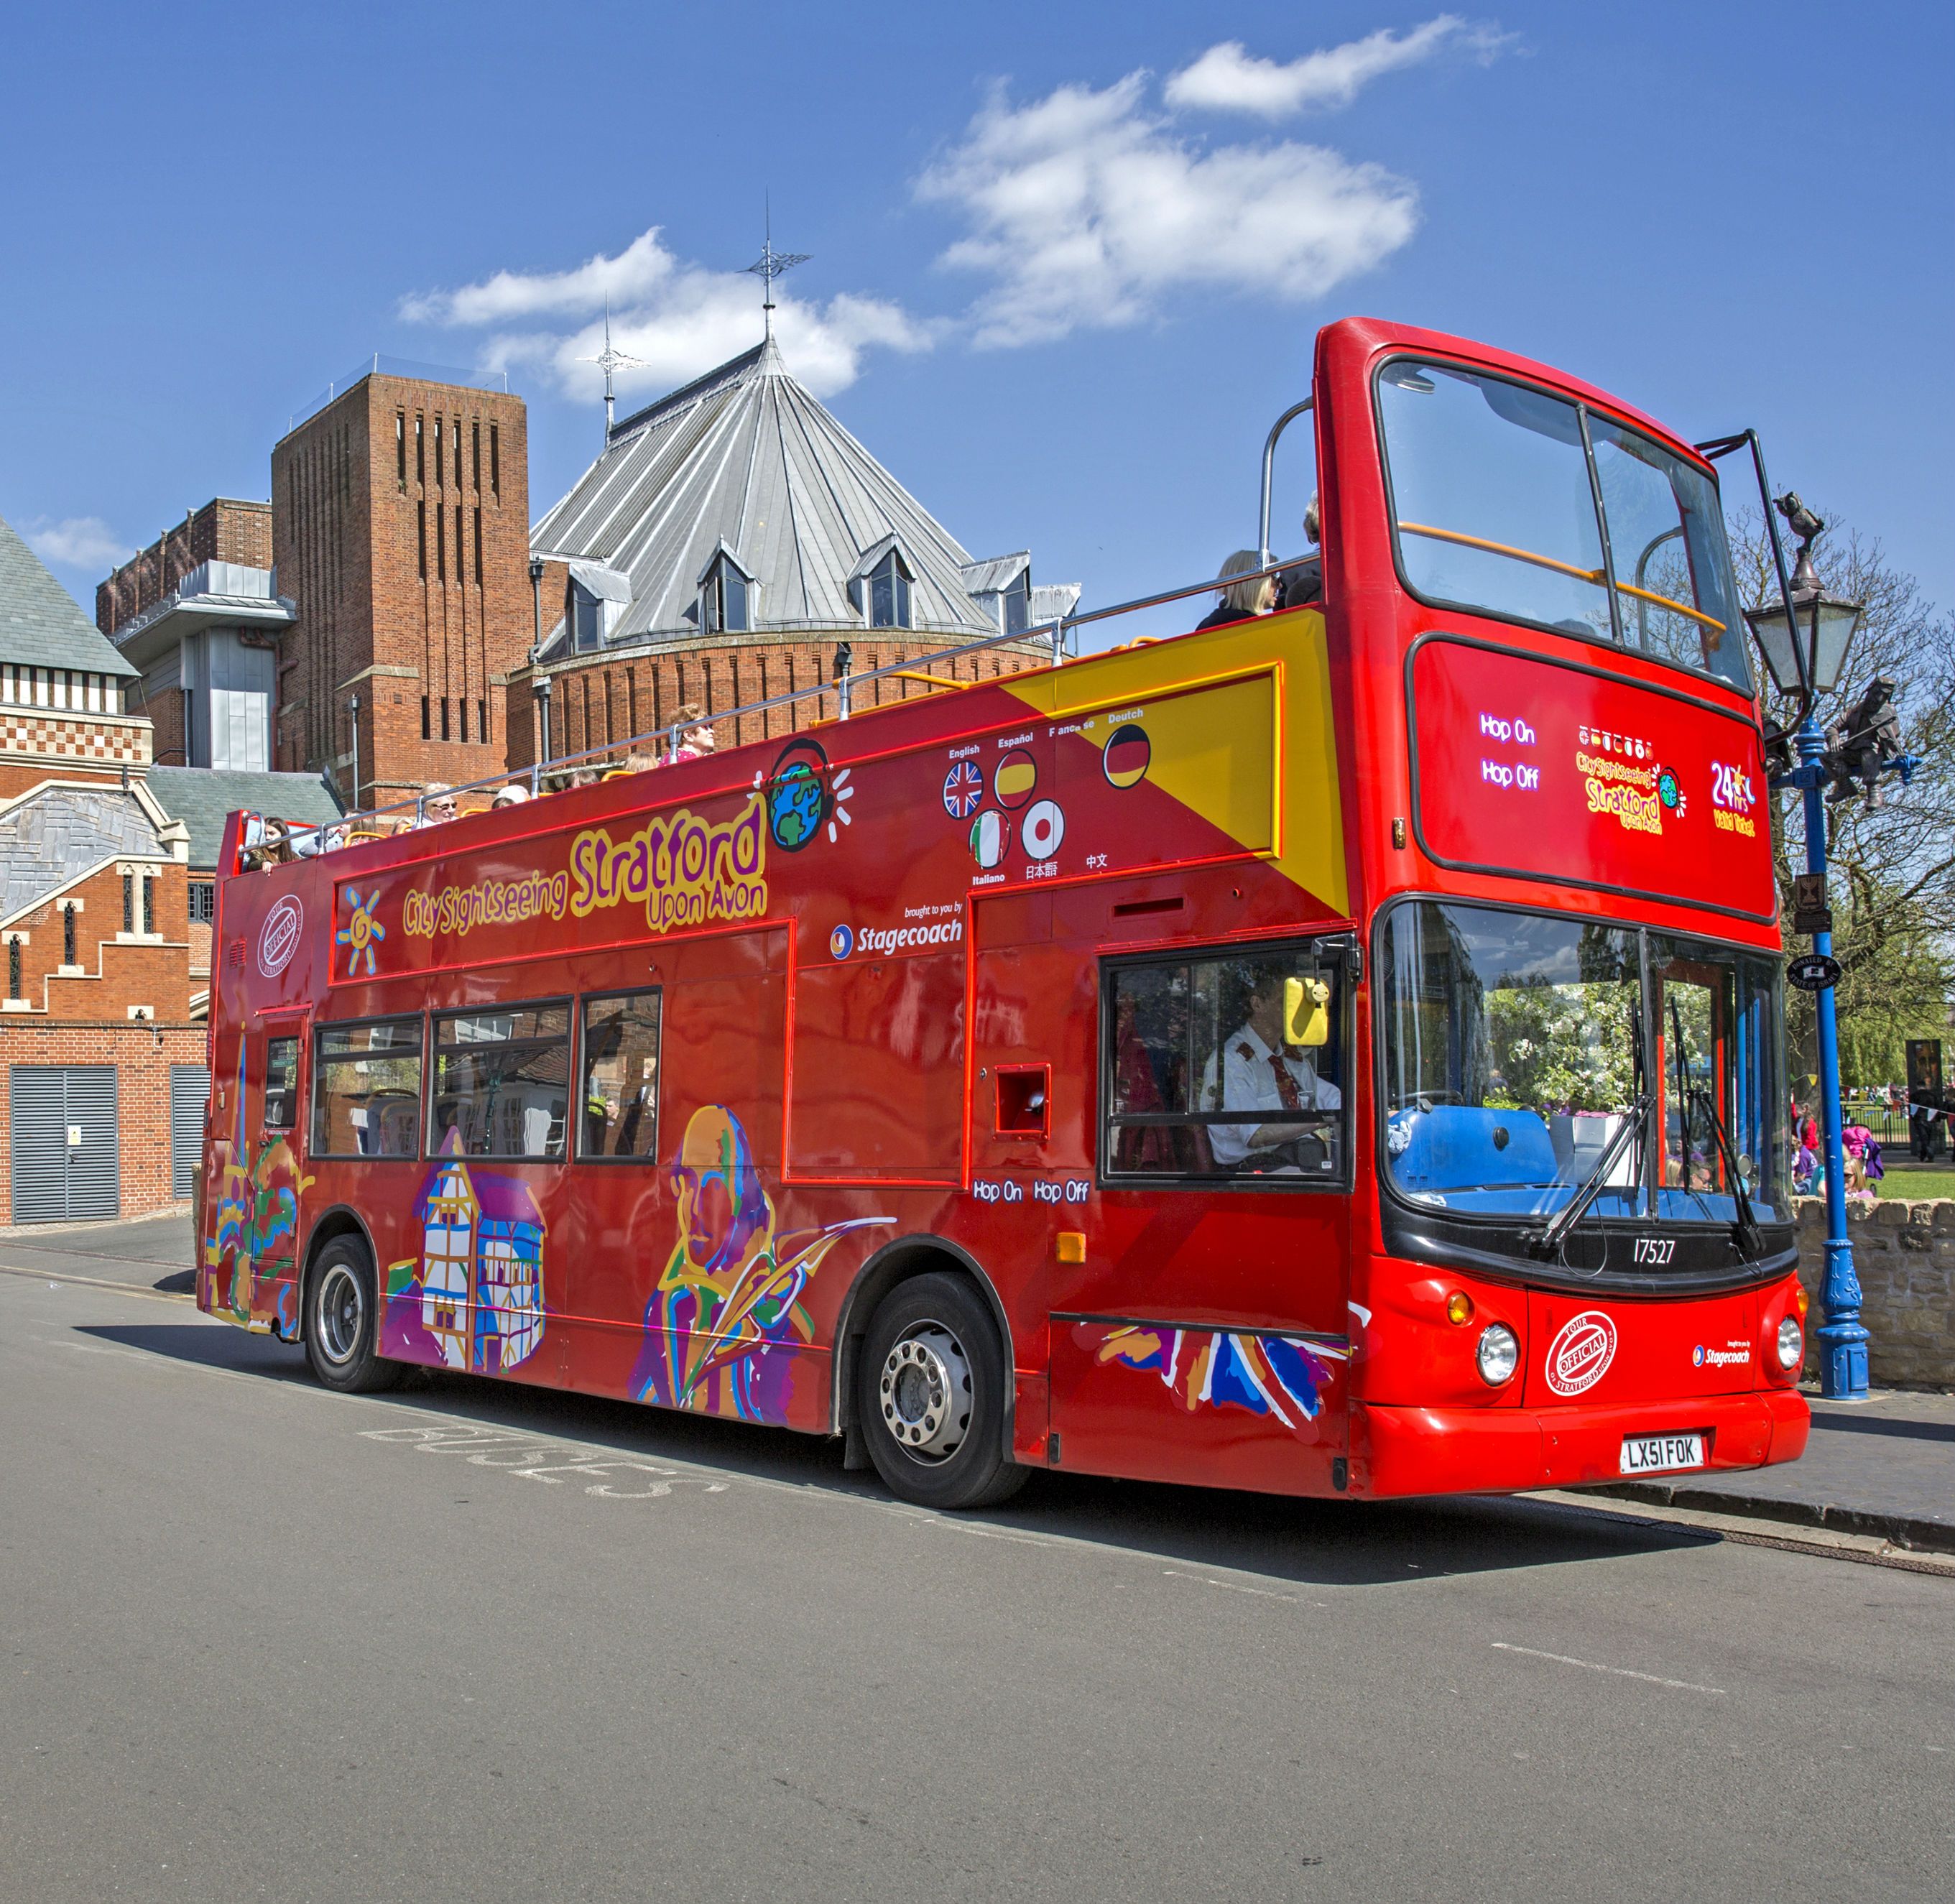 Imagen del tour: Bus turístico por Stratford-upon-Avon